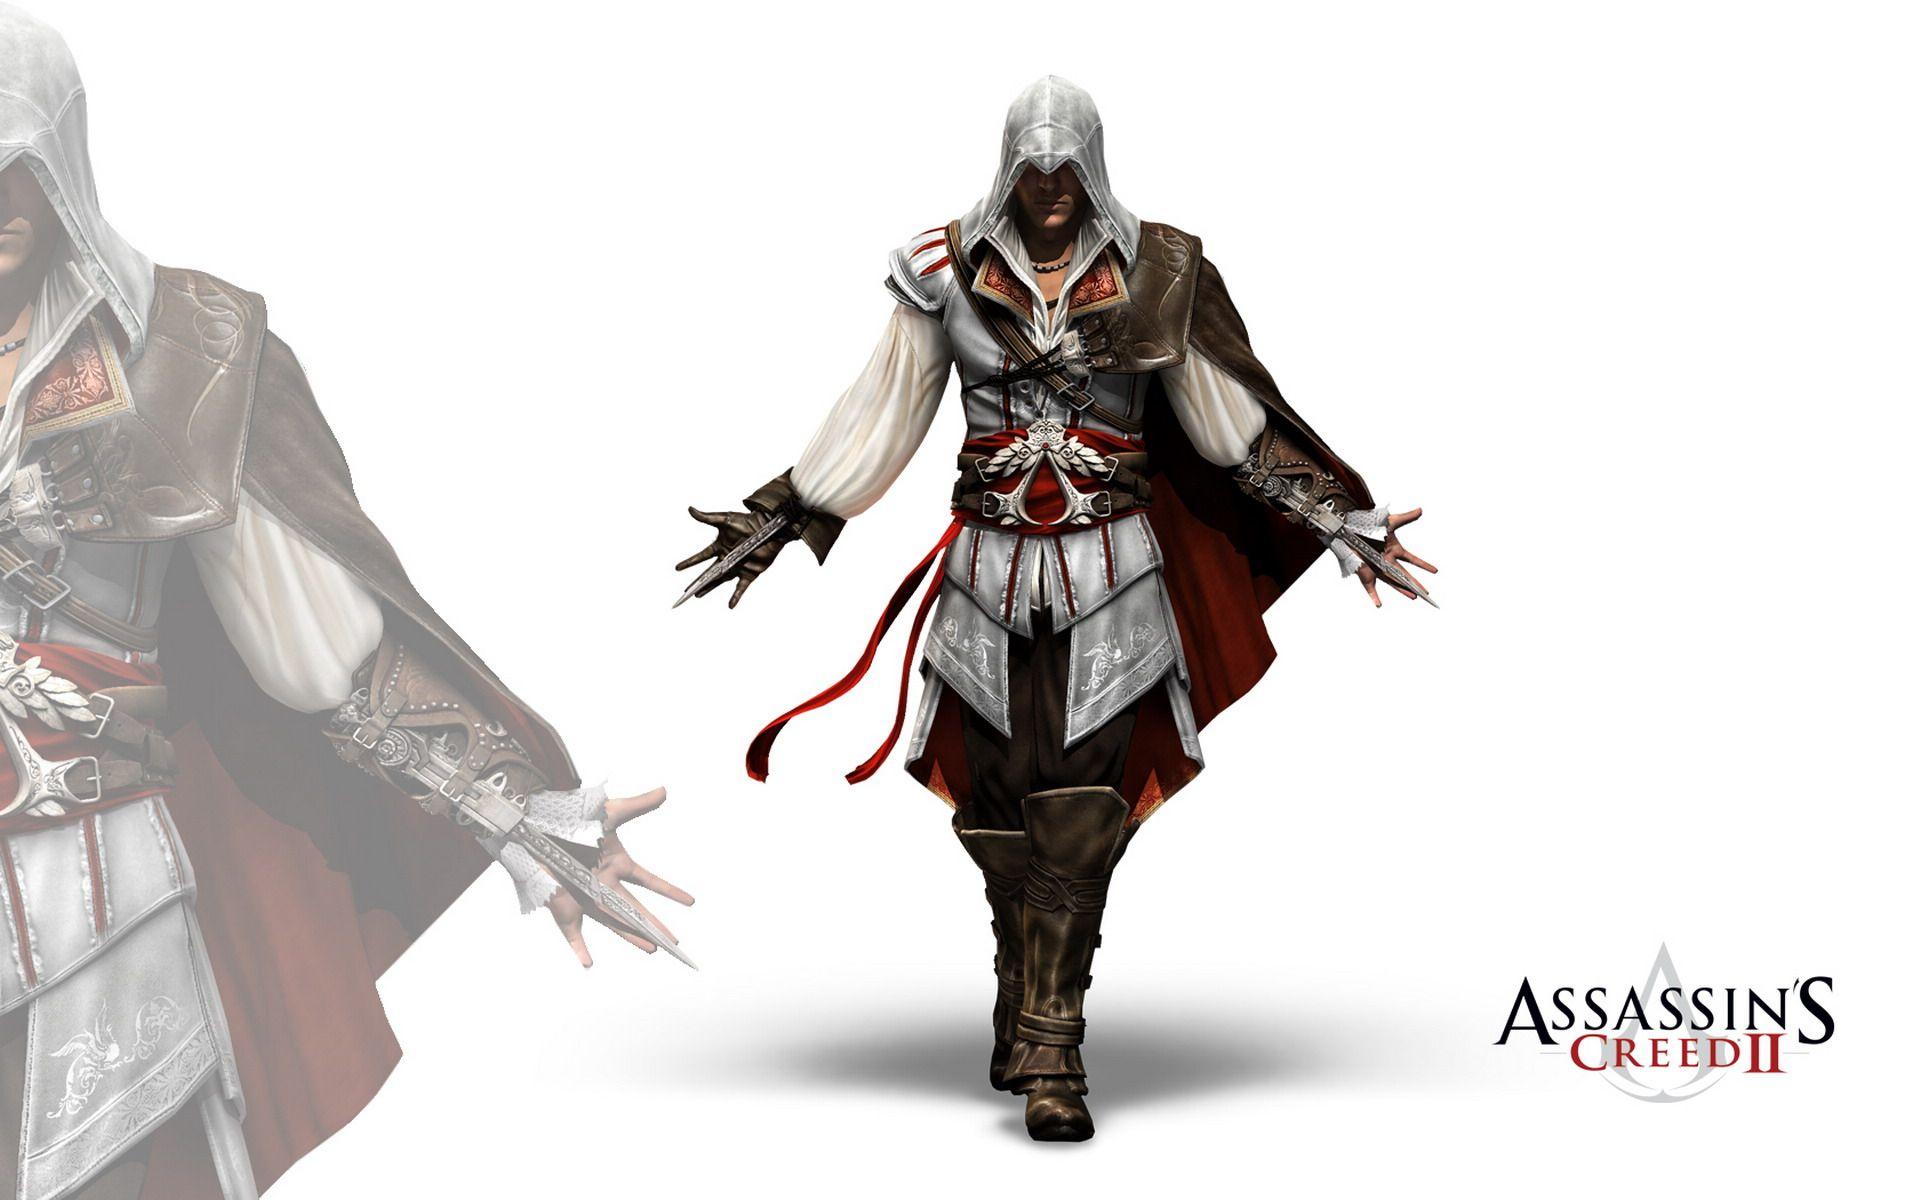 Assassin's Creed II HD Wallpaper 2 X 1200